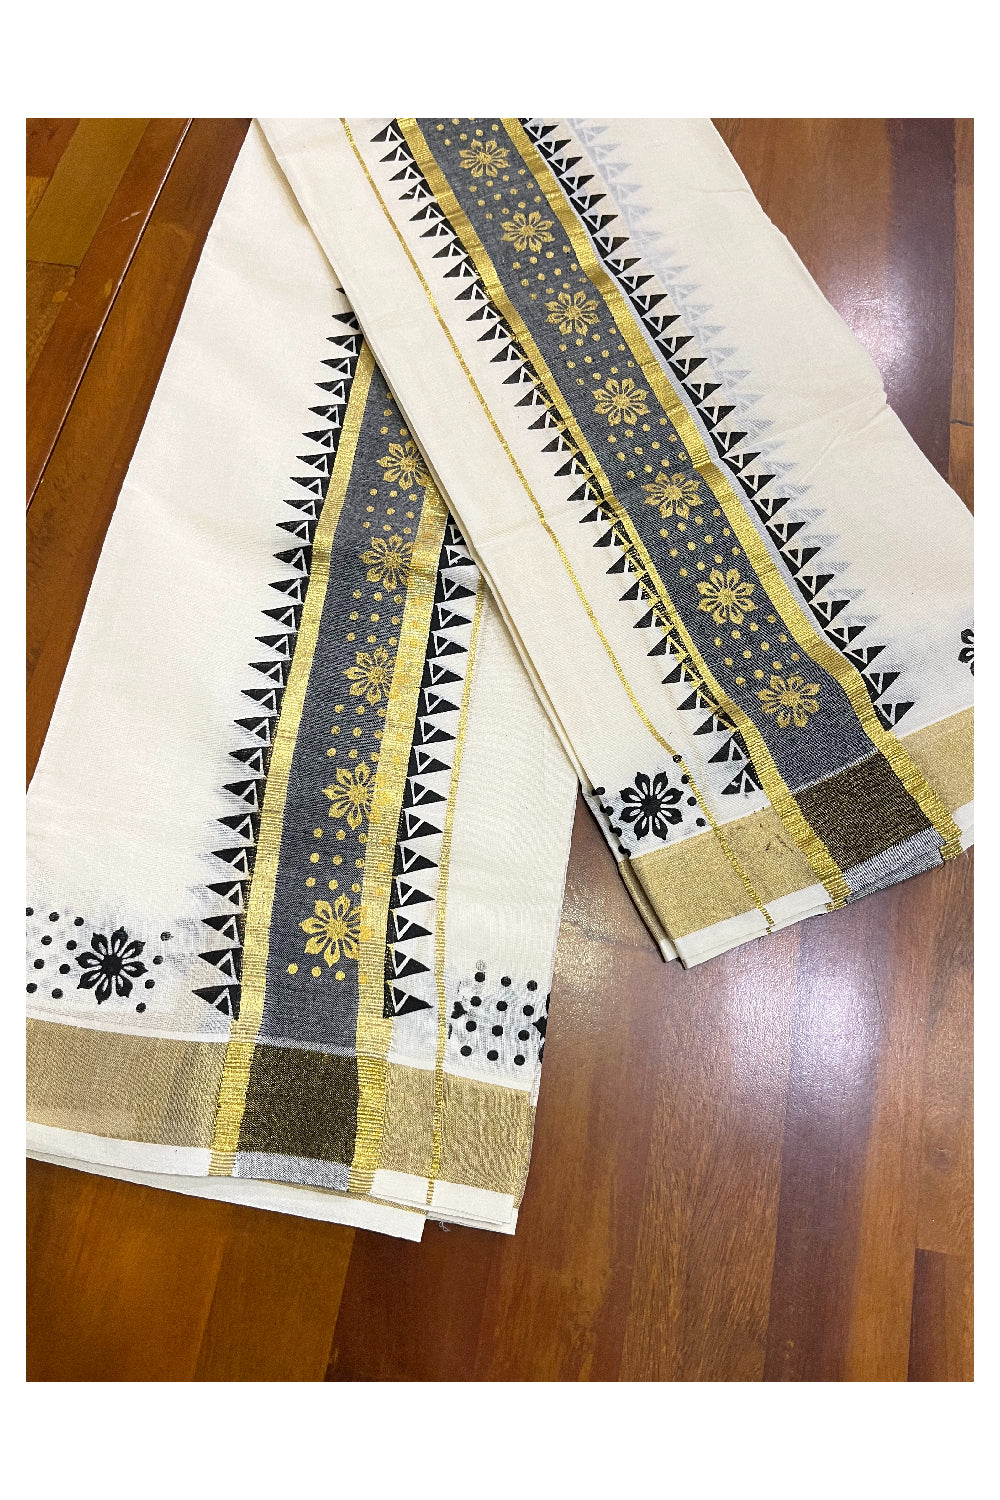 Kerala Cotton Single Set Mundu (Mundum Neriyathum) with Black Temple and Golden Block Prints on Kasavu Border - 2.80Mtrs